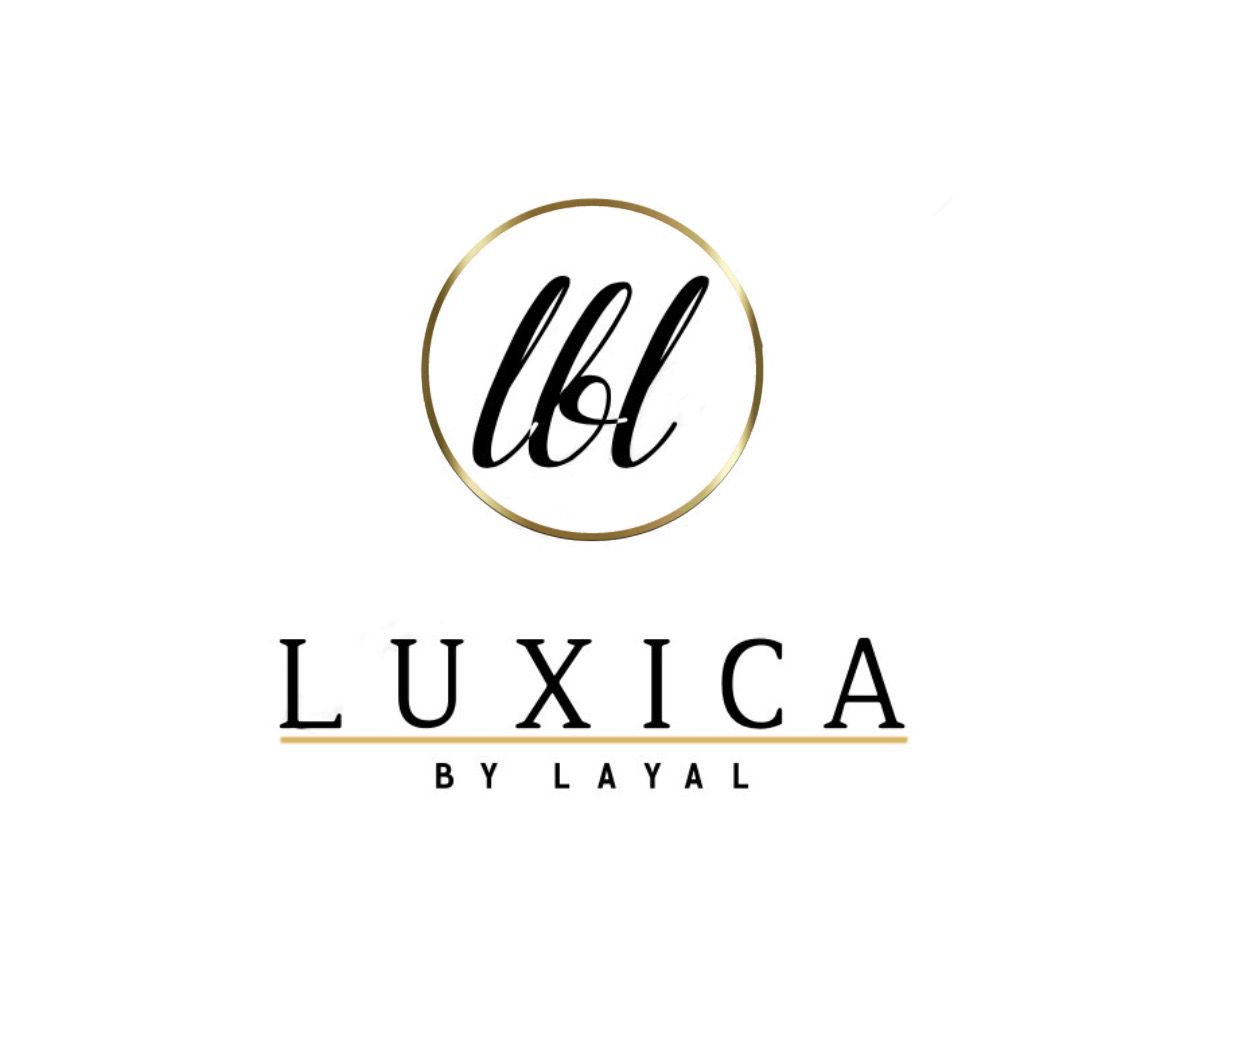 Luxica_bylayal